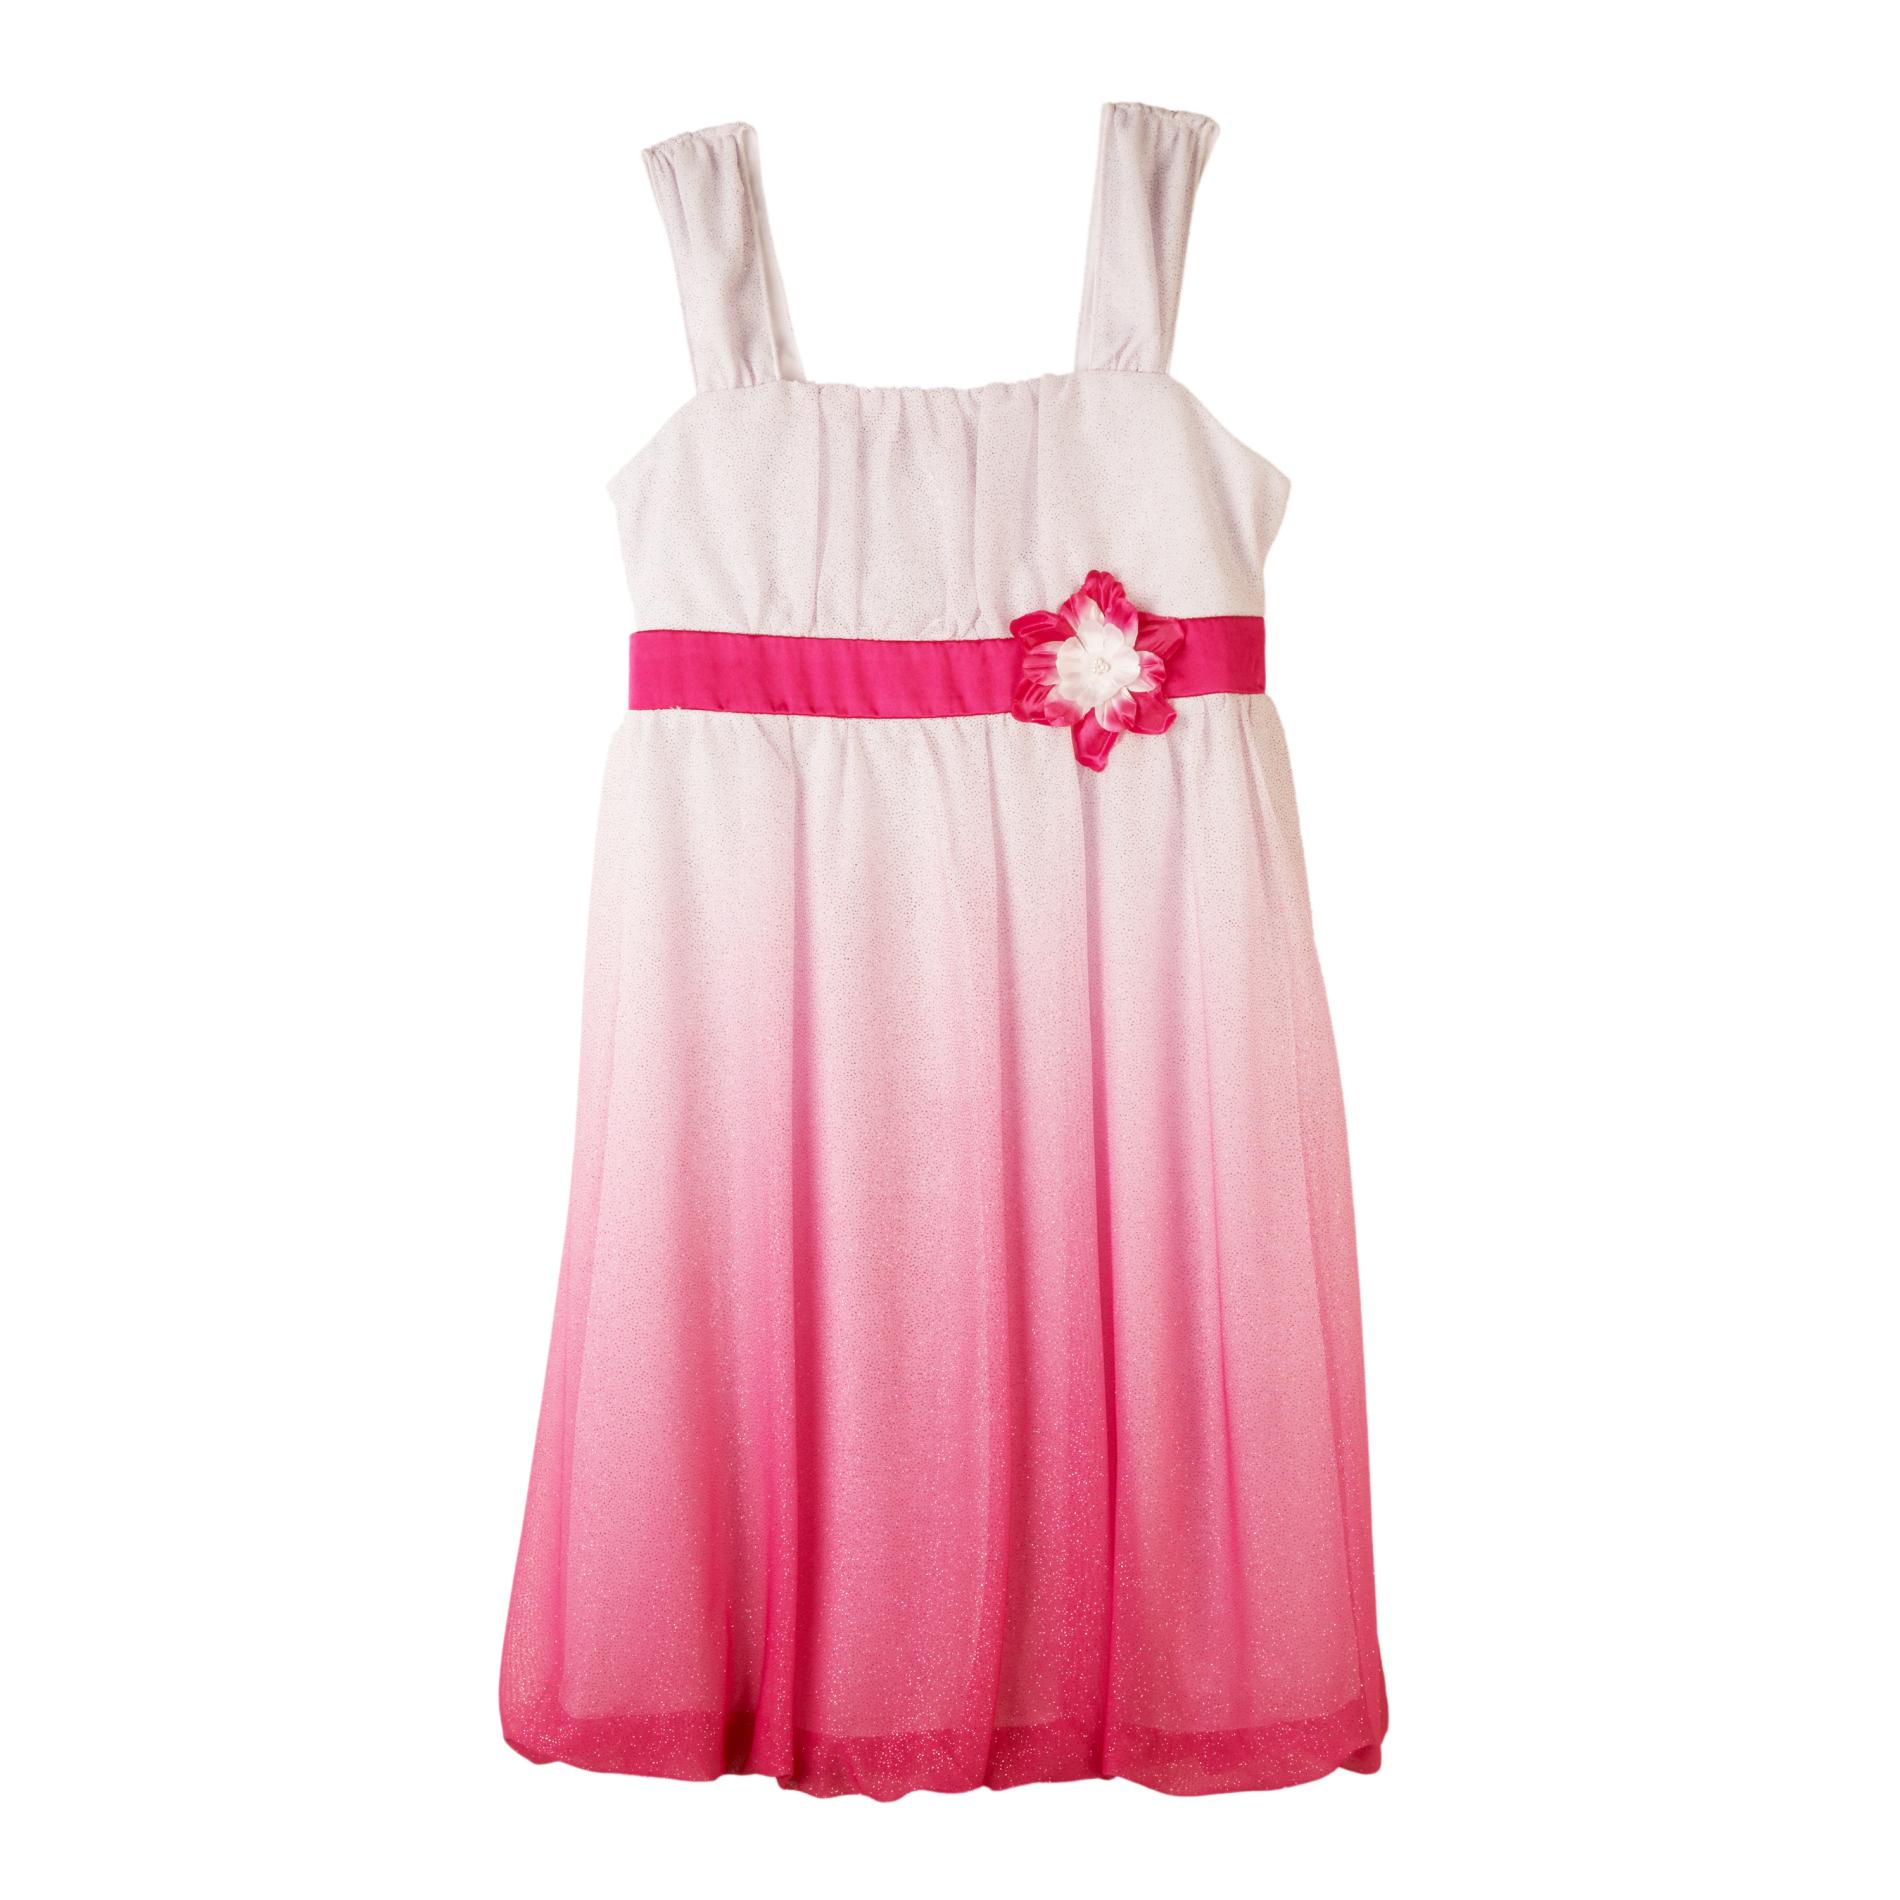 Amy's Closet Girl's Sleeveless Party Dress - Ombre